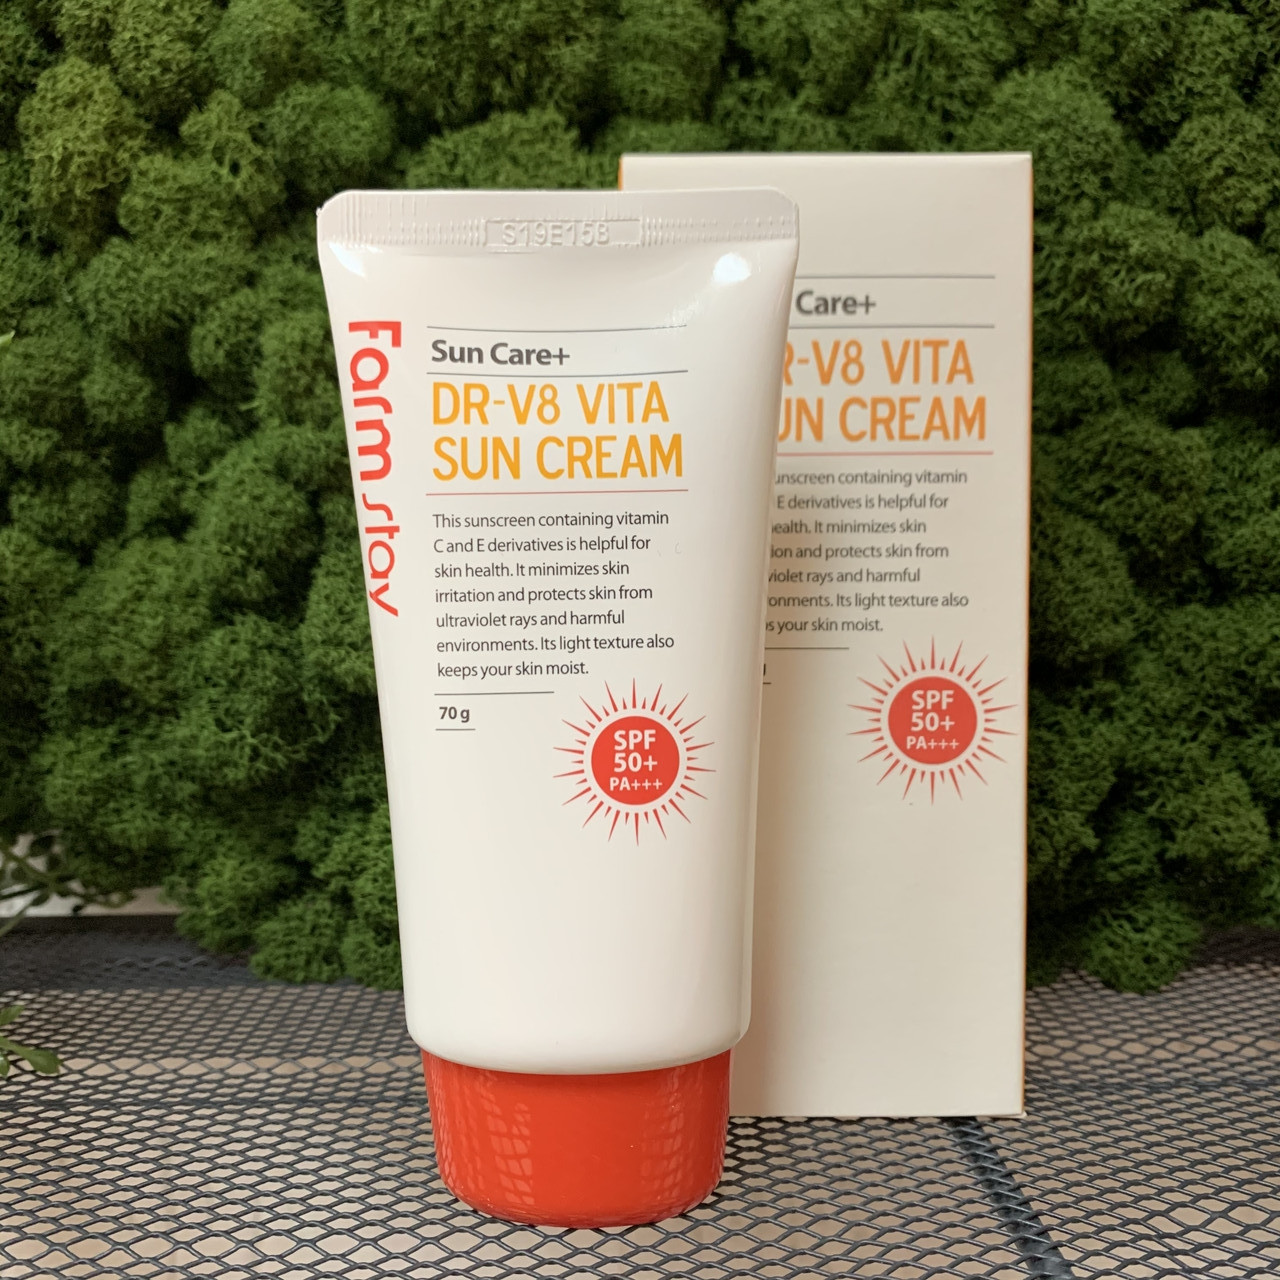 Солнцезащитный крем для лица с легкой текстурой FarmStay DR-V8 Vita Sun Cream SPF 50/PA+++, 70 мл